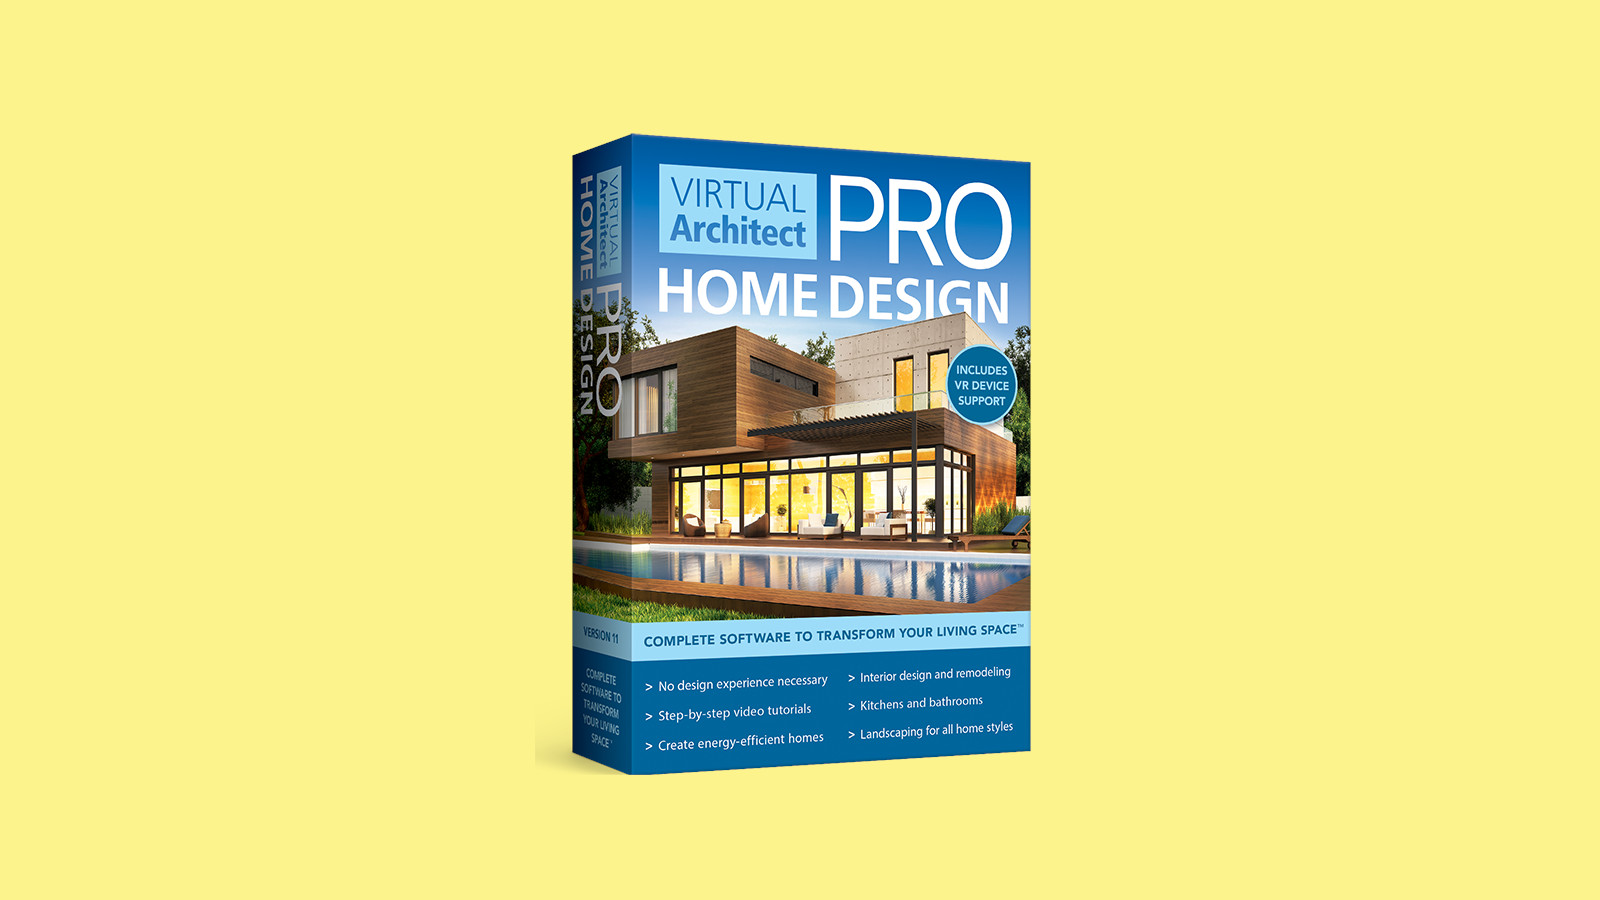 Virtual Architect Professional Home Design 11 CD Key, 258.03 usd